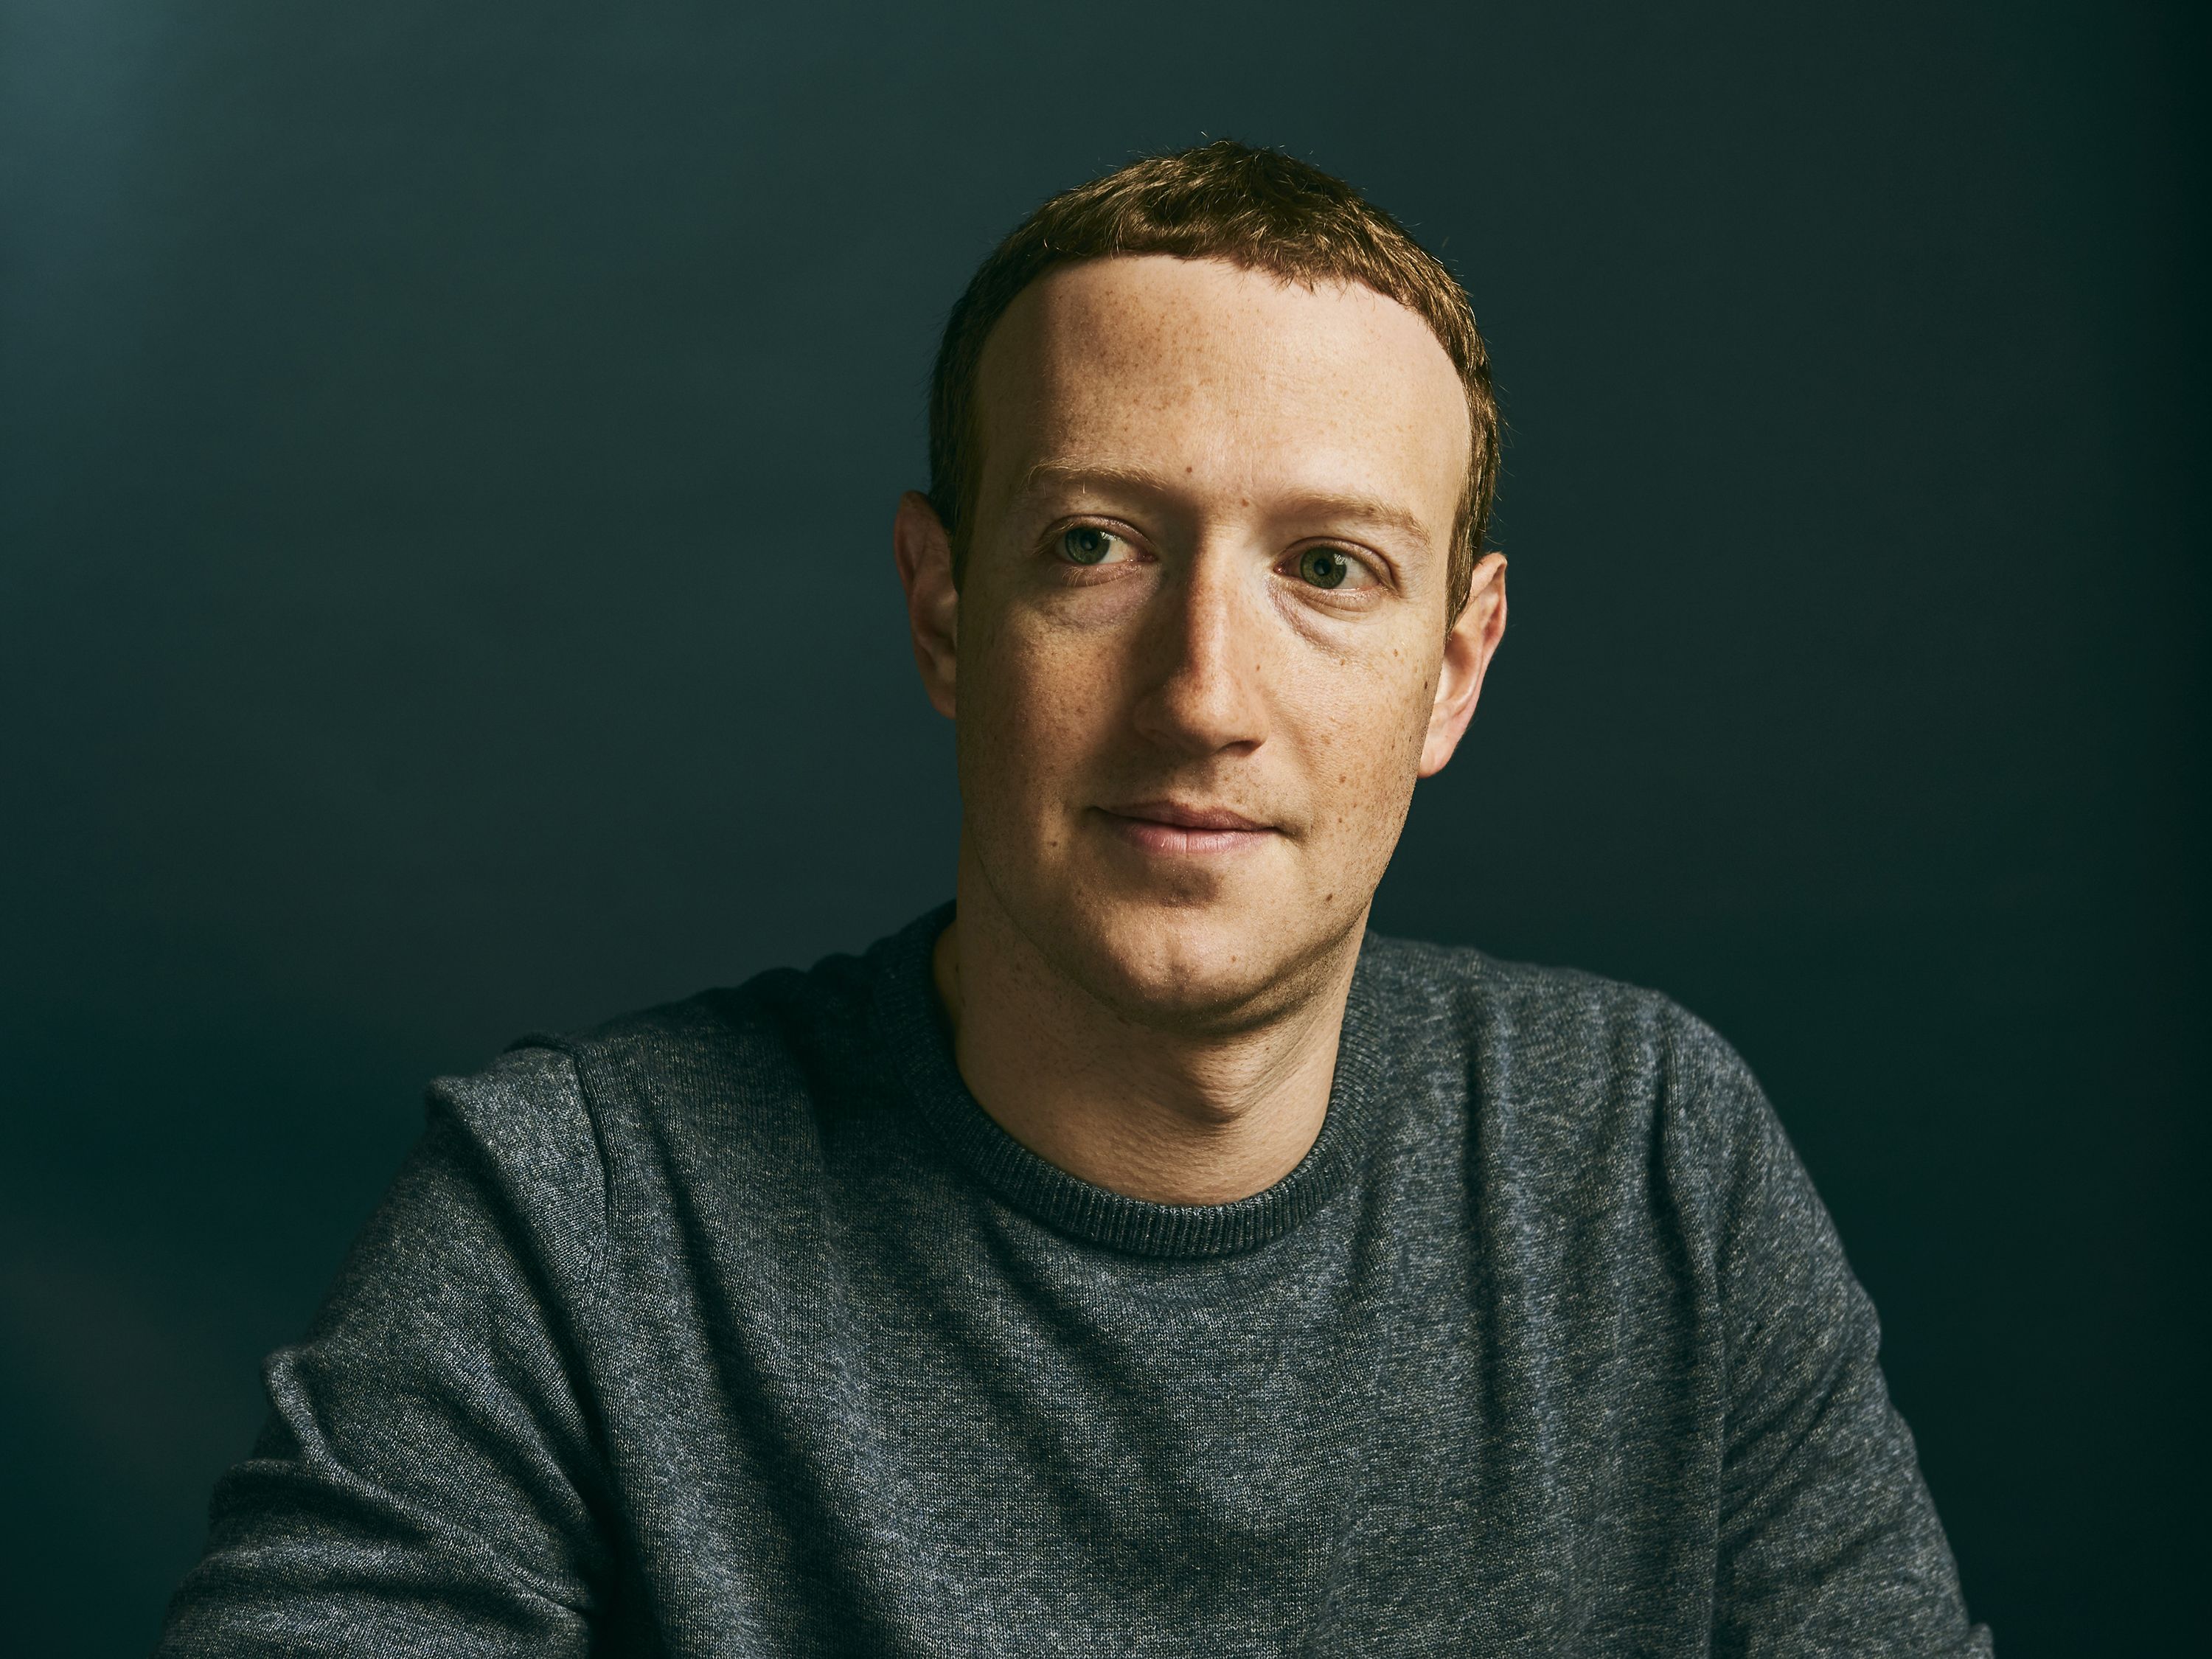 Mark Zuckerberg poses for a portrait in 2019.